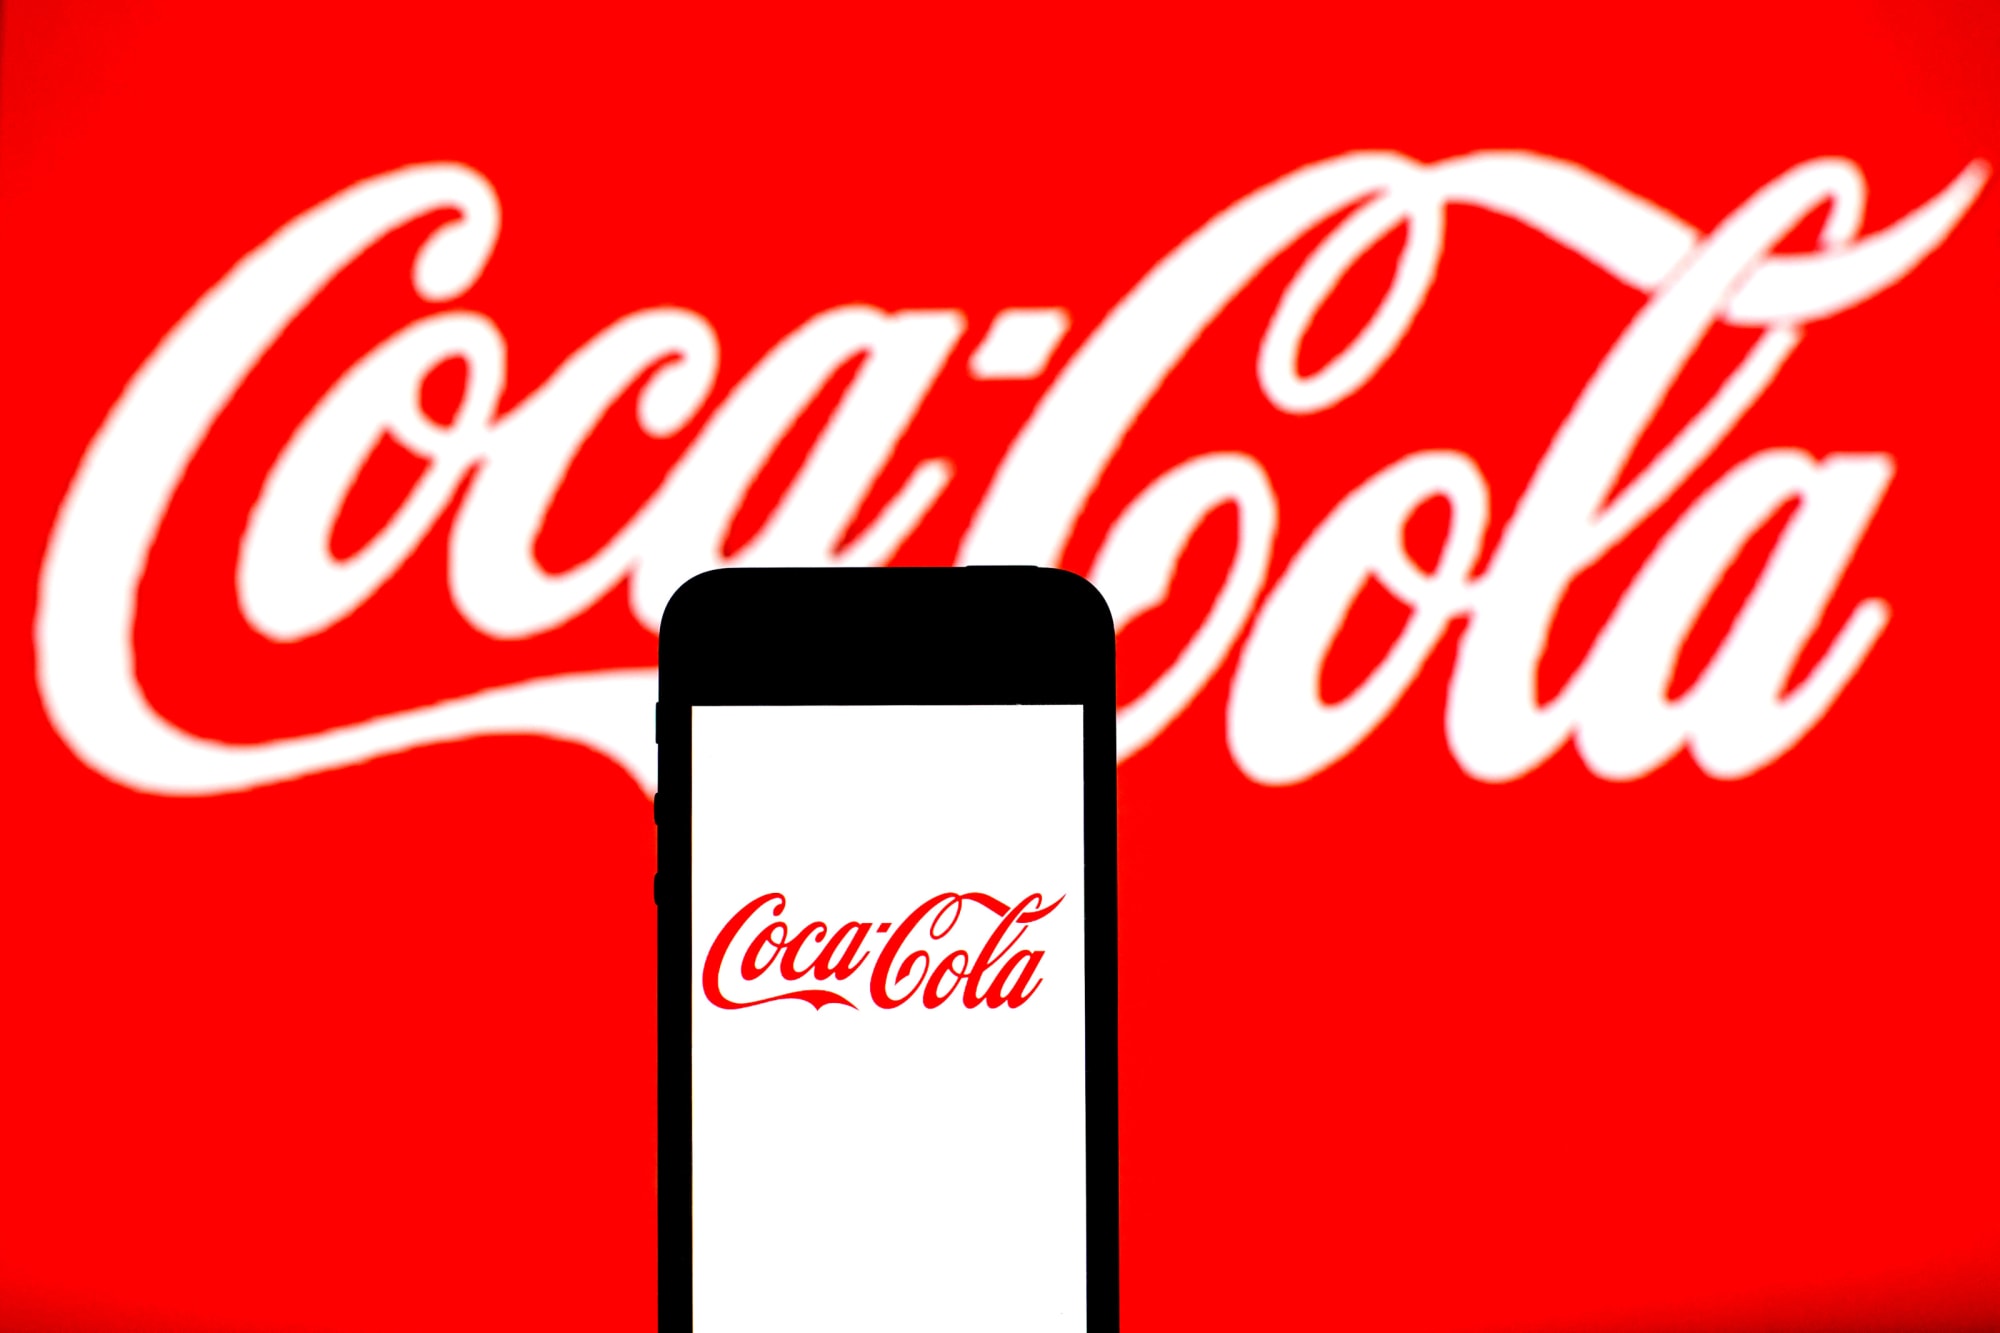 coca cola company values